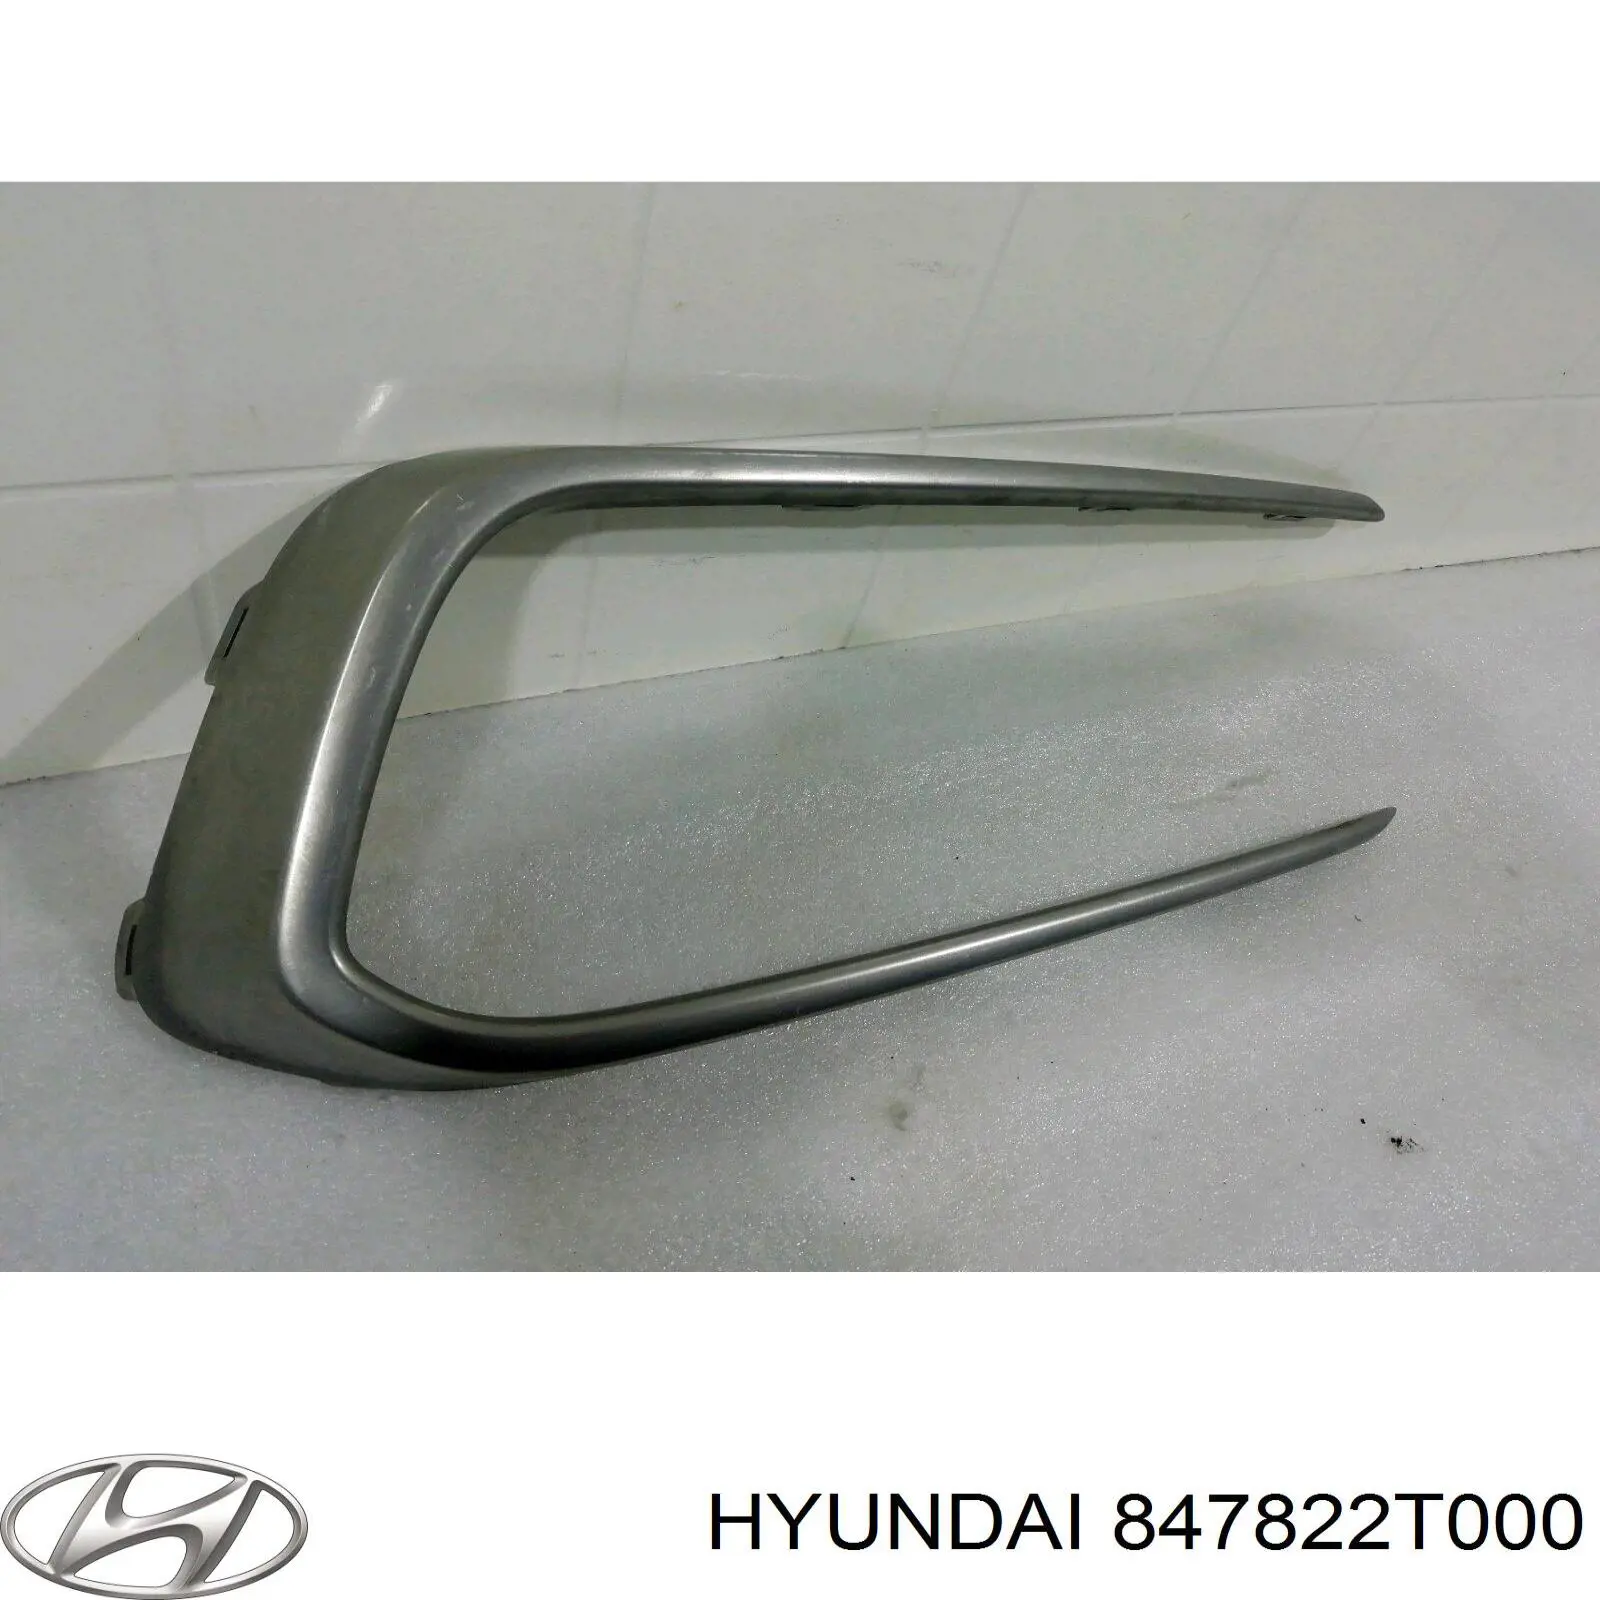 847822T000 Hyundai/Kia